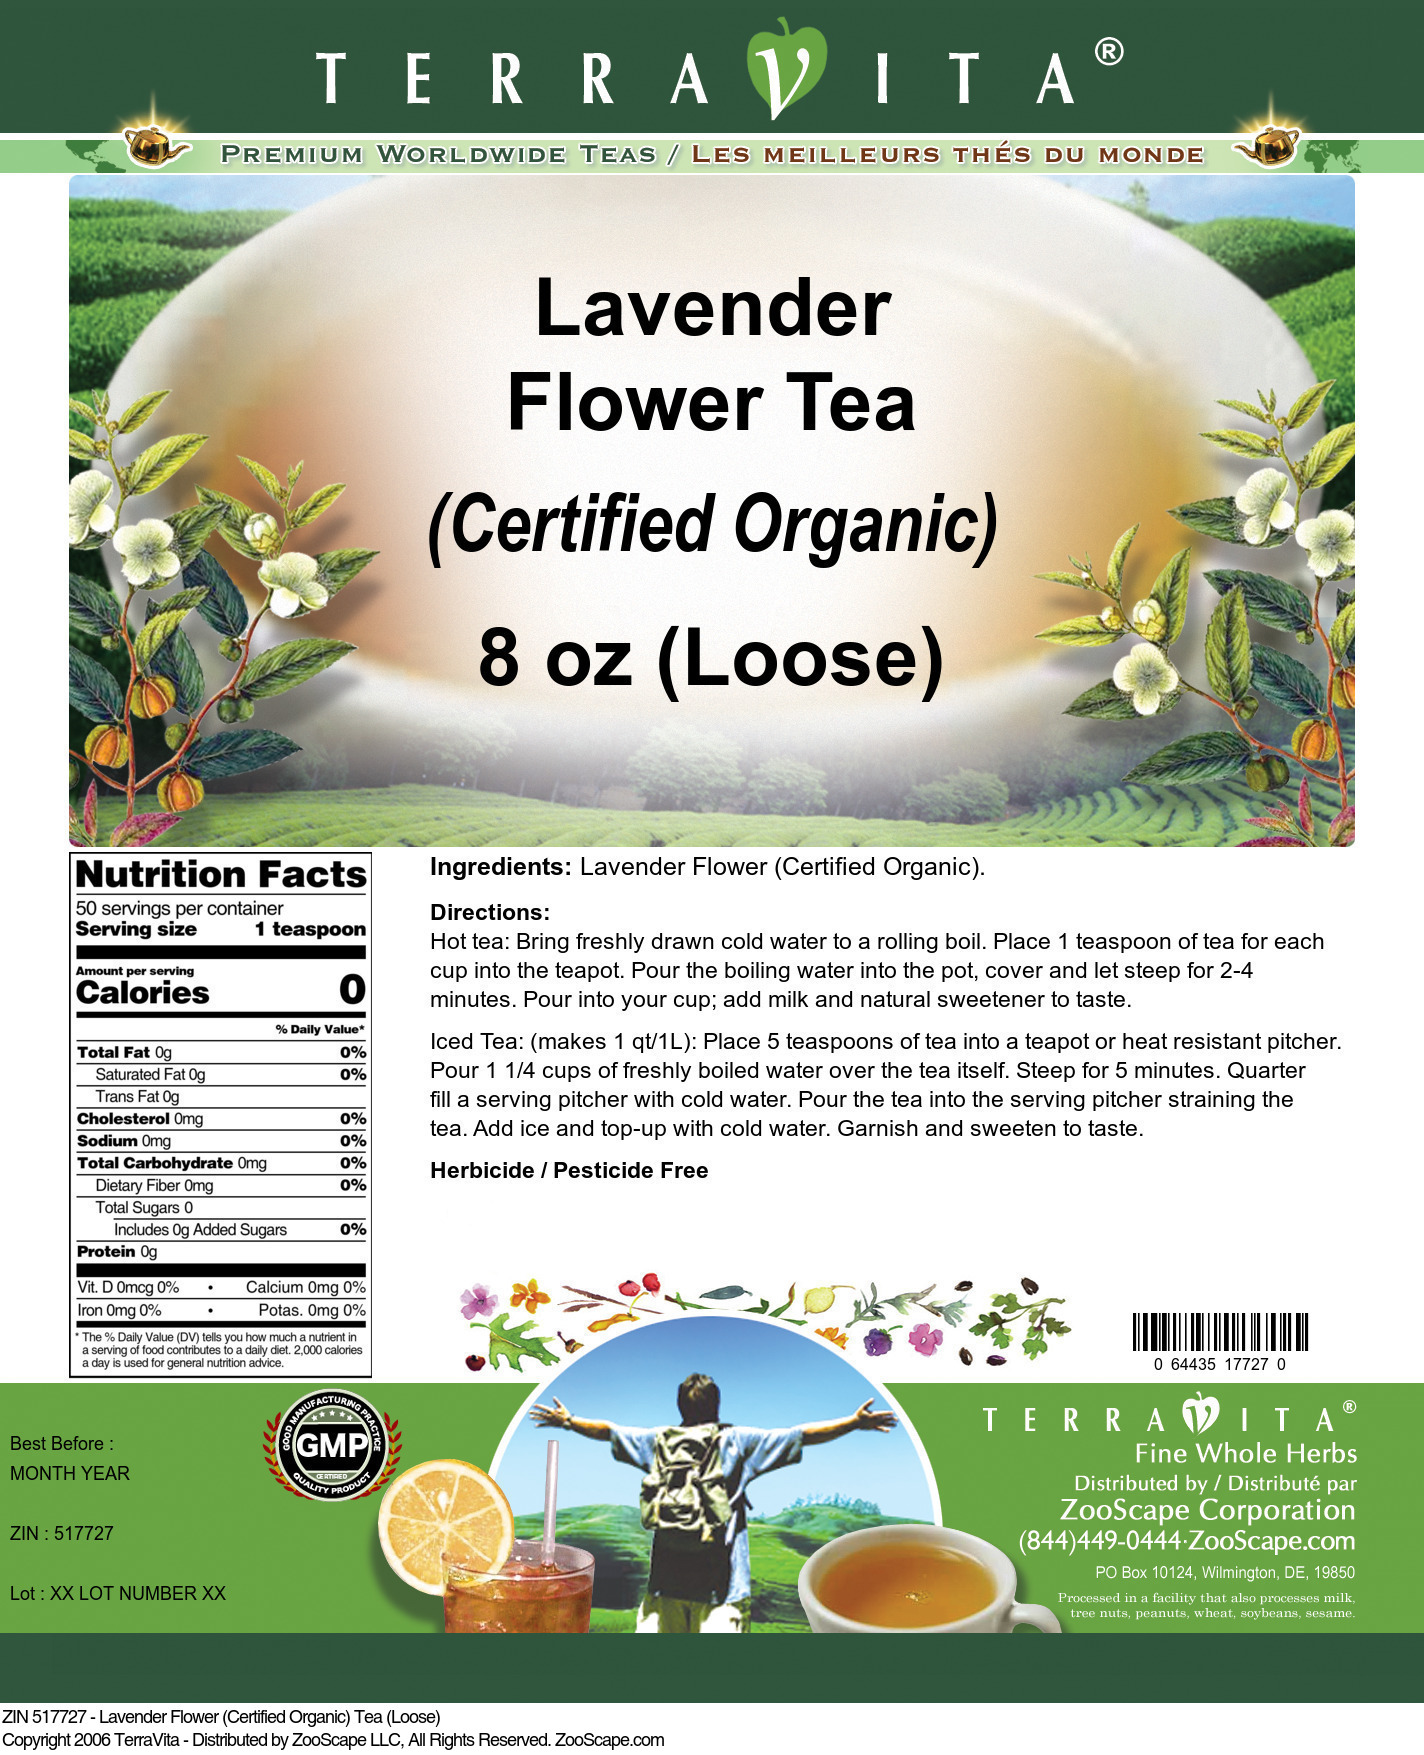 Lavender Flower (Certified Organic) Tea (Loose) - Label